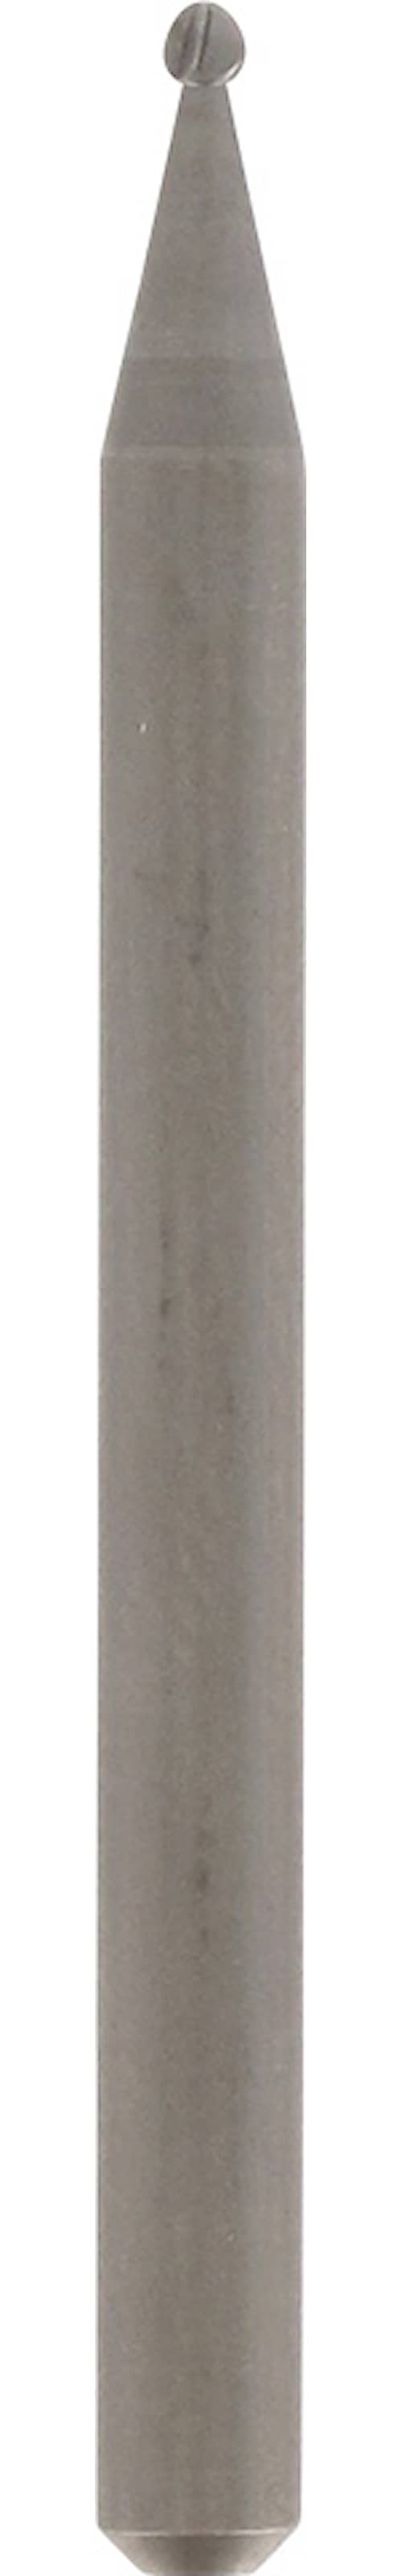 Dremel Gravyrfräs 405JA 1,6mm 3st